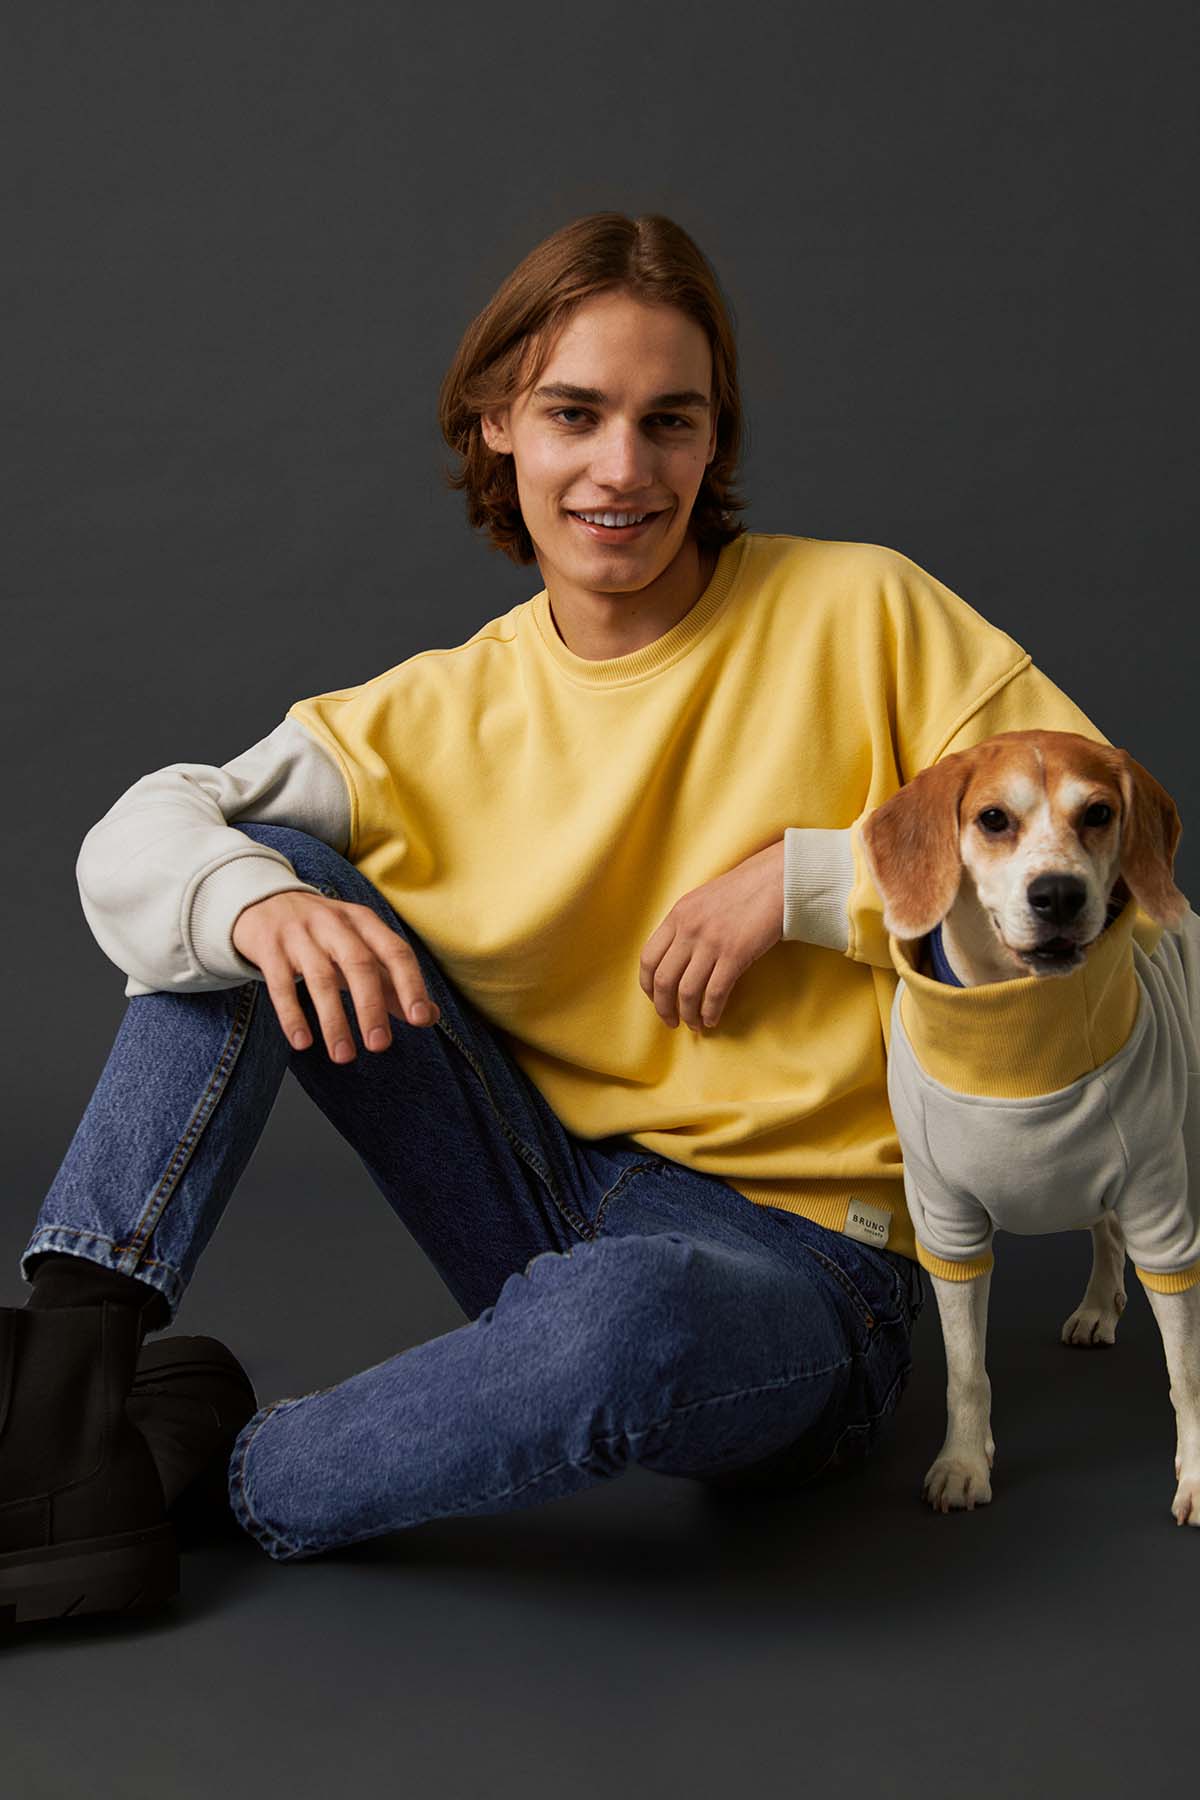 Köpek Sweatshirt - Taş Grisi/Soluk Sarı - Bruno Society